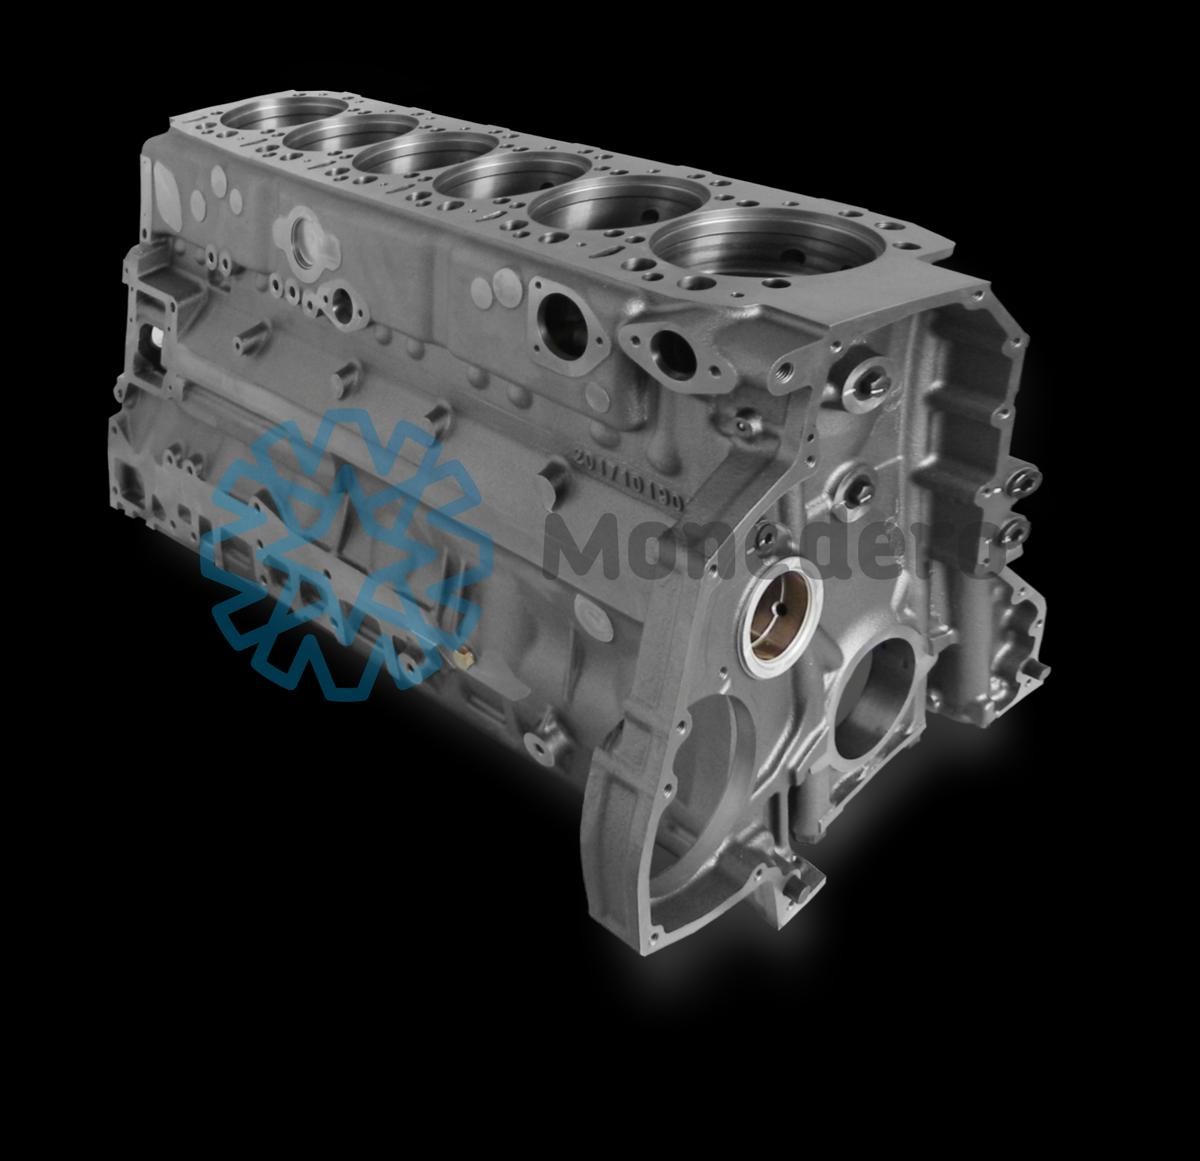 MONEDERO 20010000003 Engine block Cast Iron